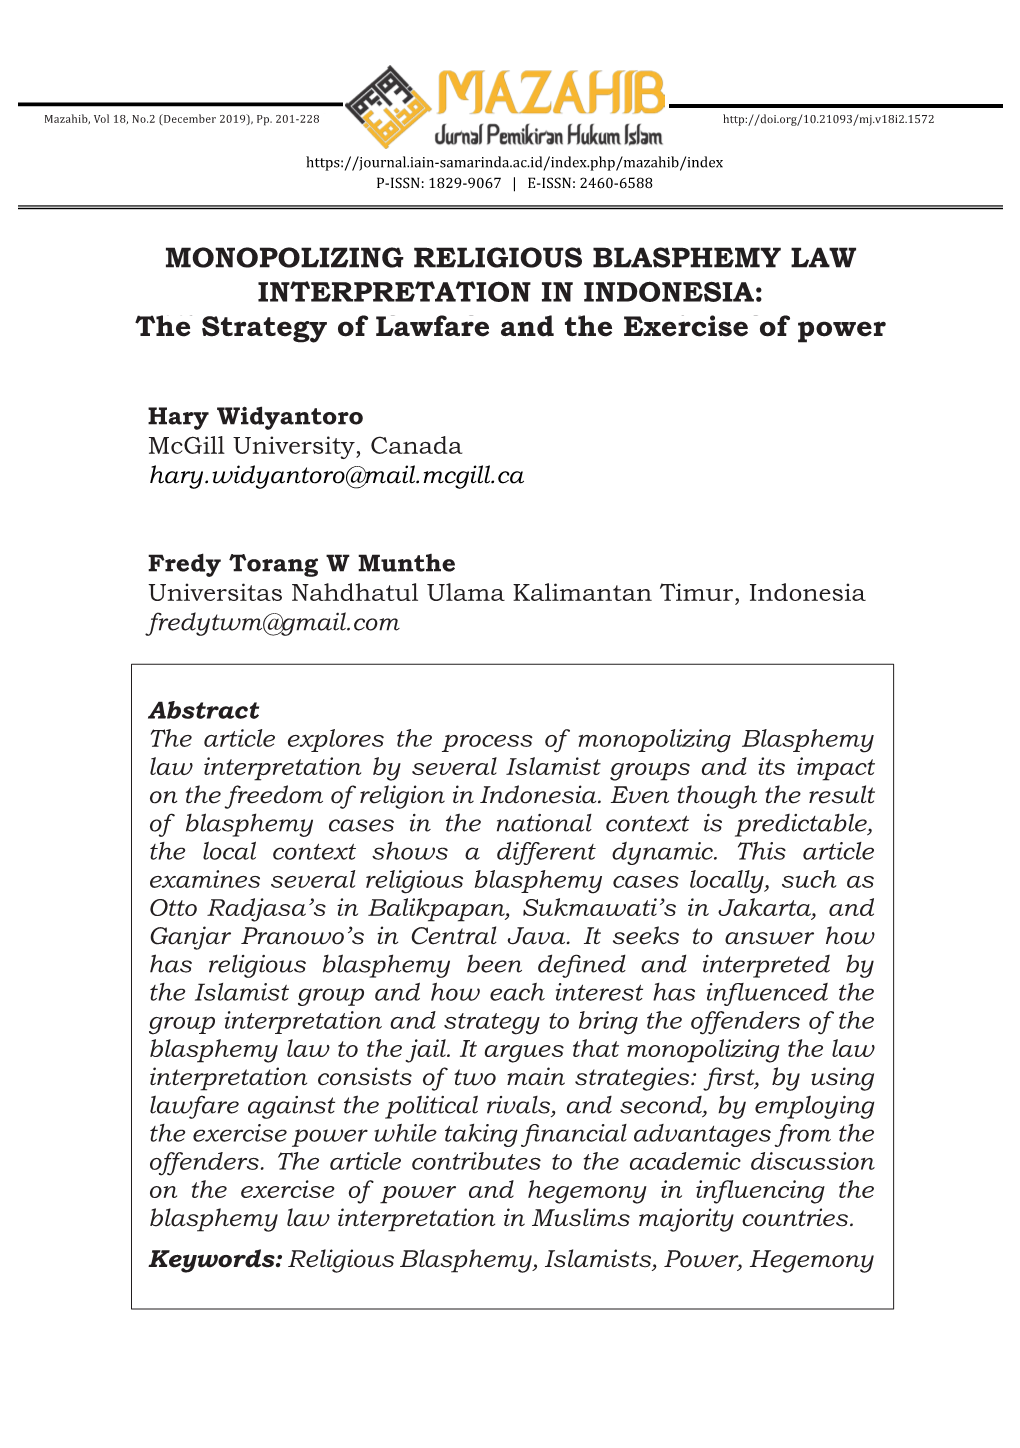 Monopolizing Religious Blasphemy Law